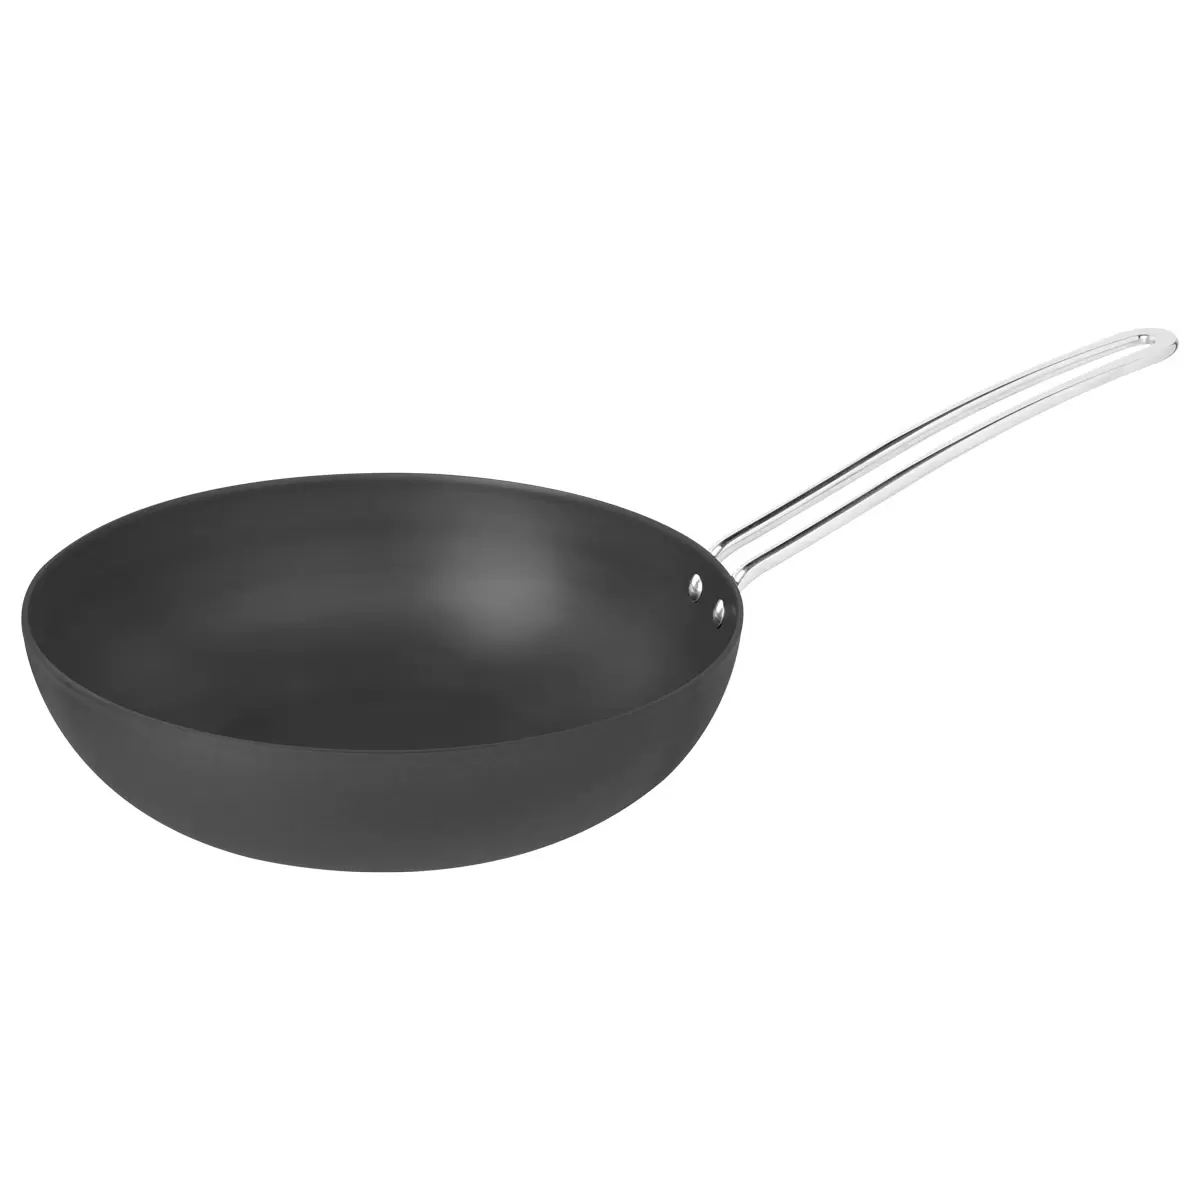 Bridseye view of wok